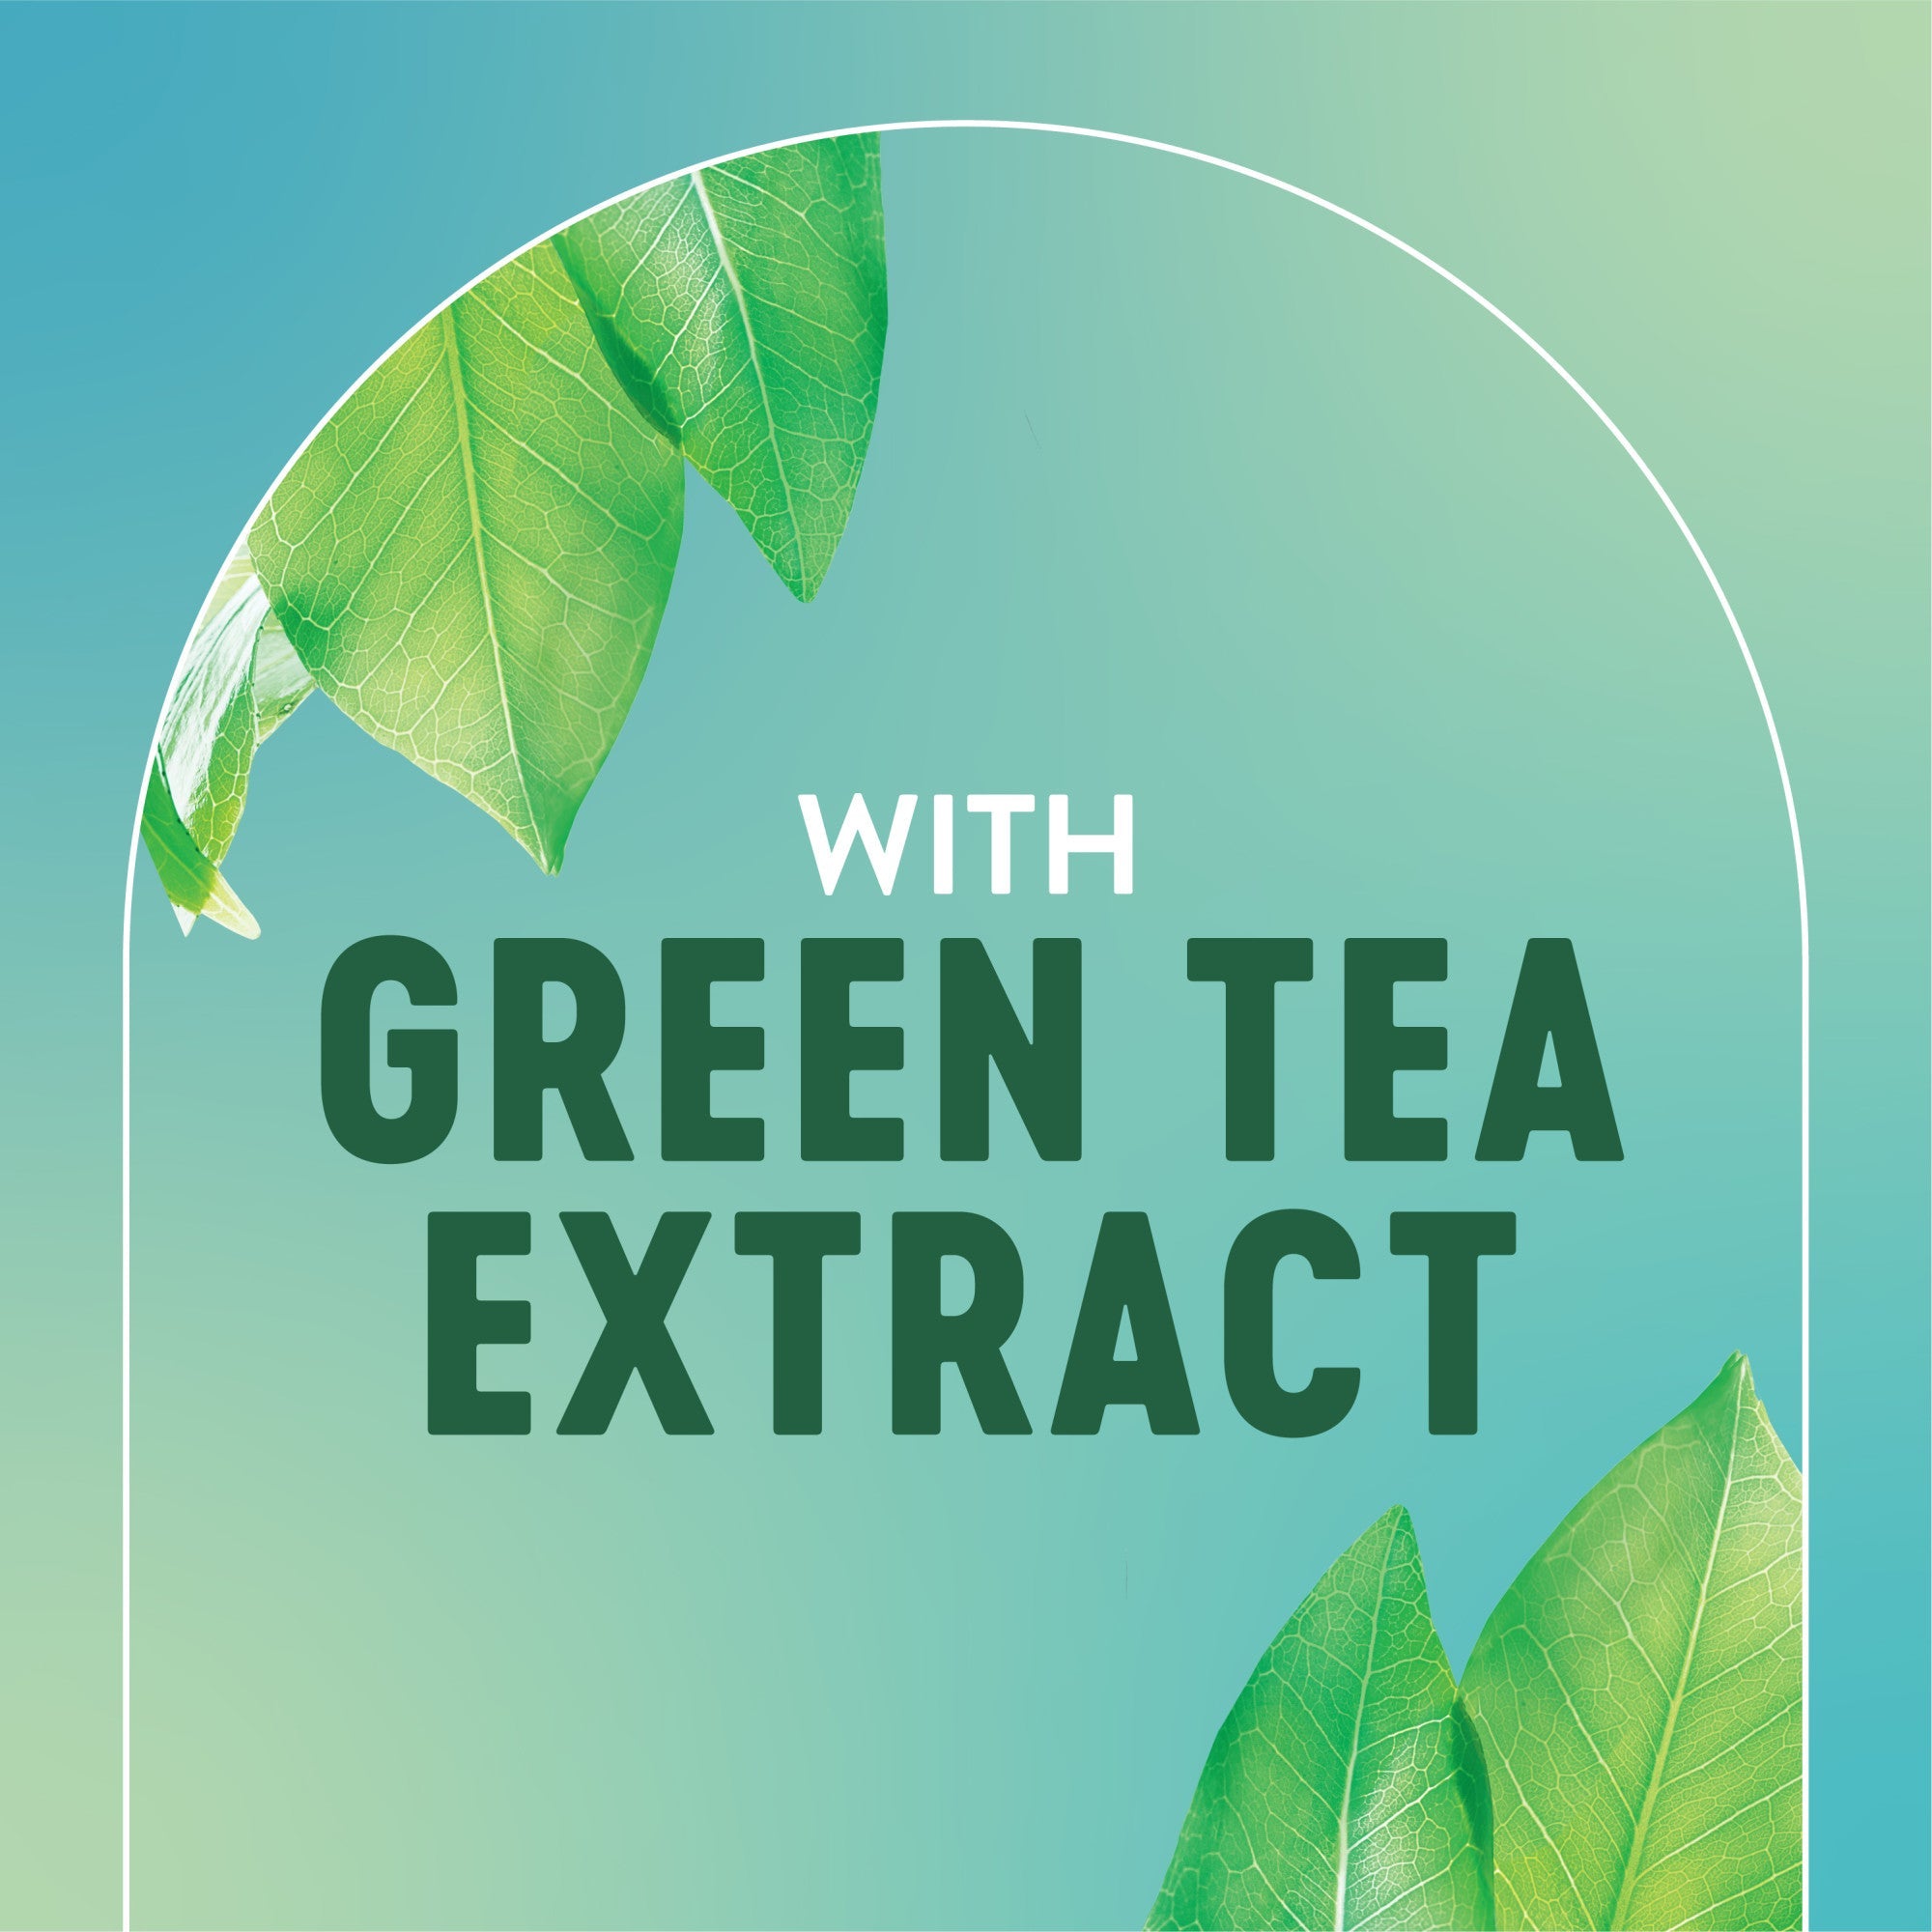 English: With green tea extract Français: Avec extrait de thé vert